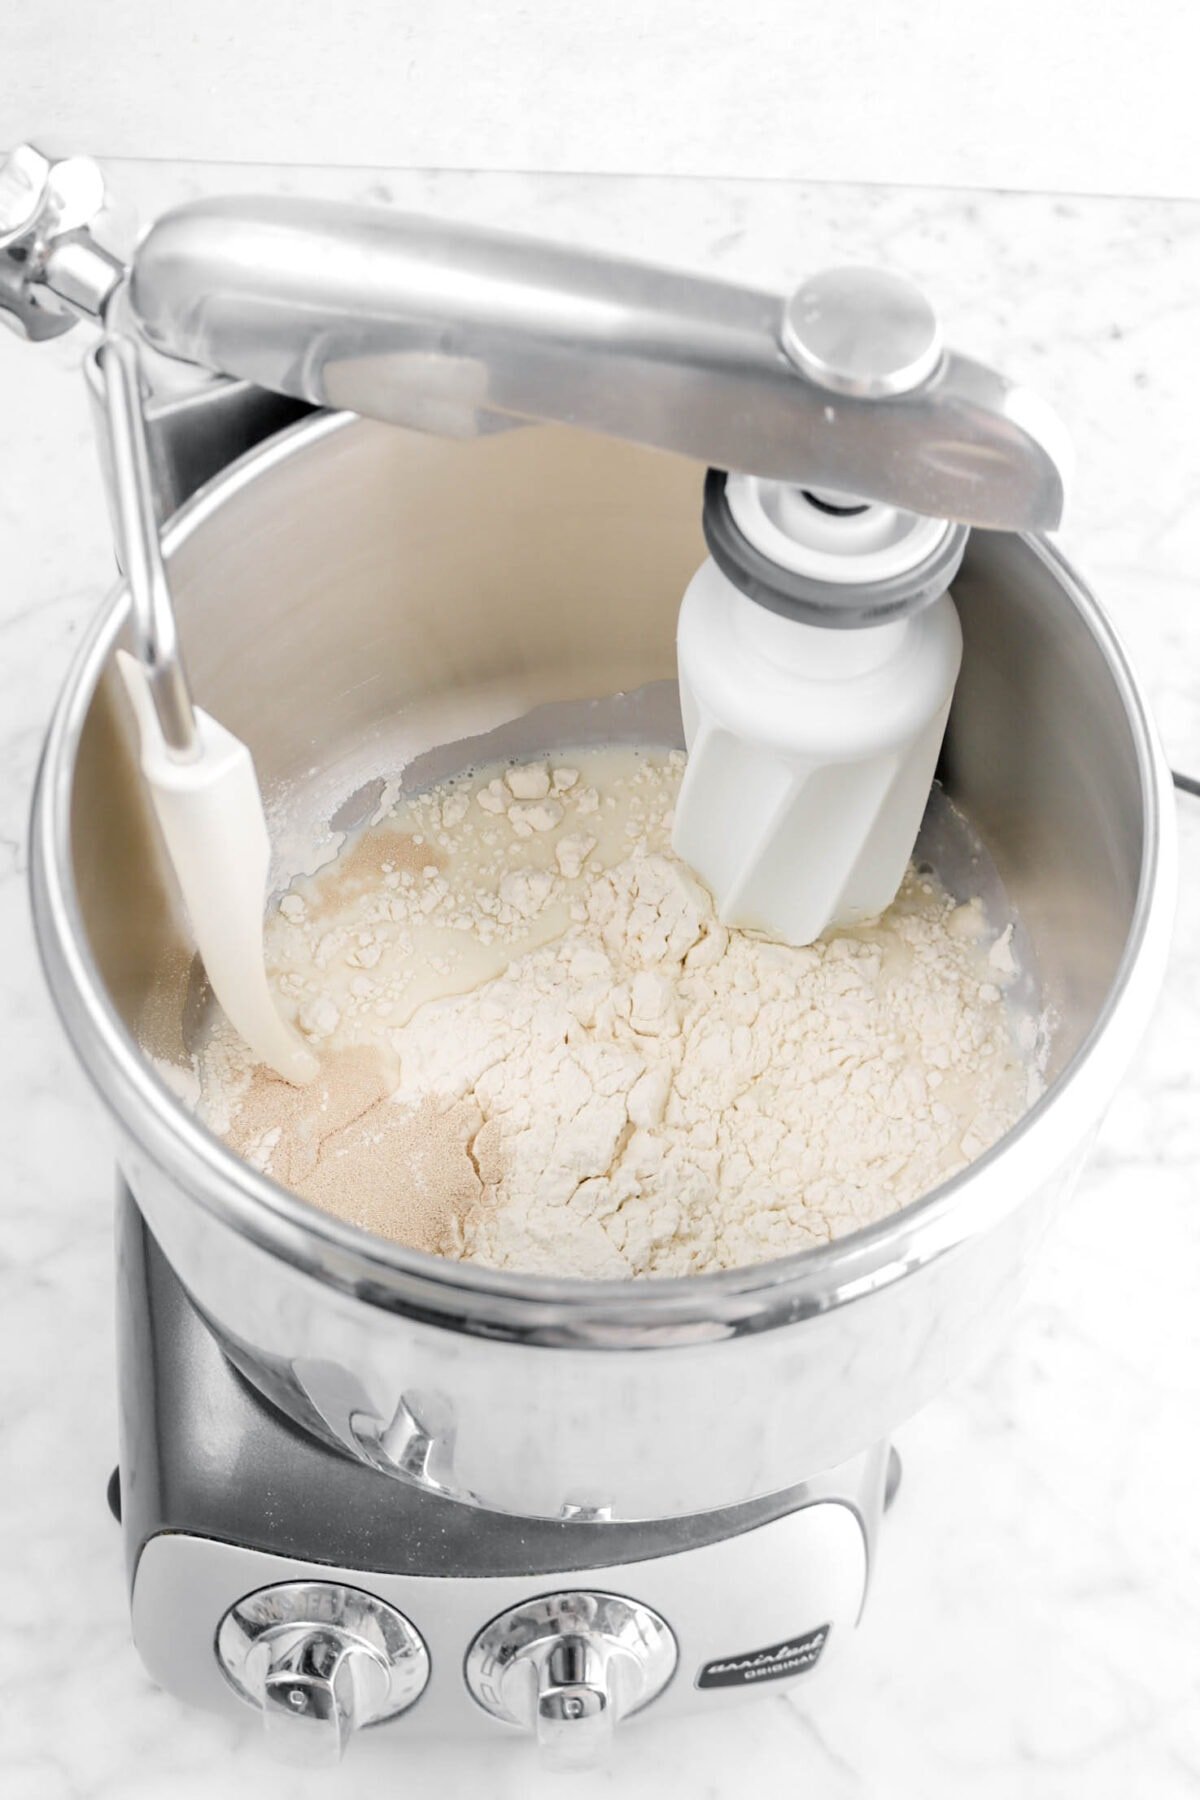 milk, yeast, and flour in mixer